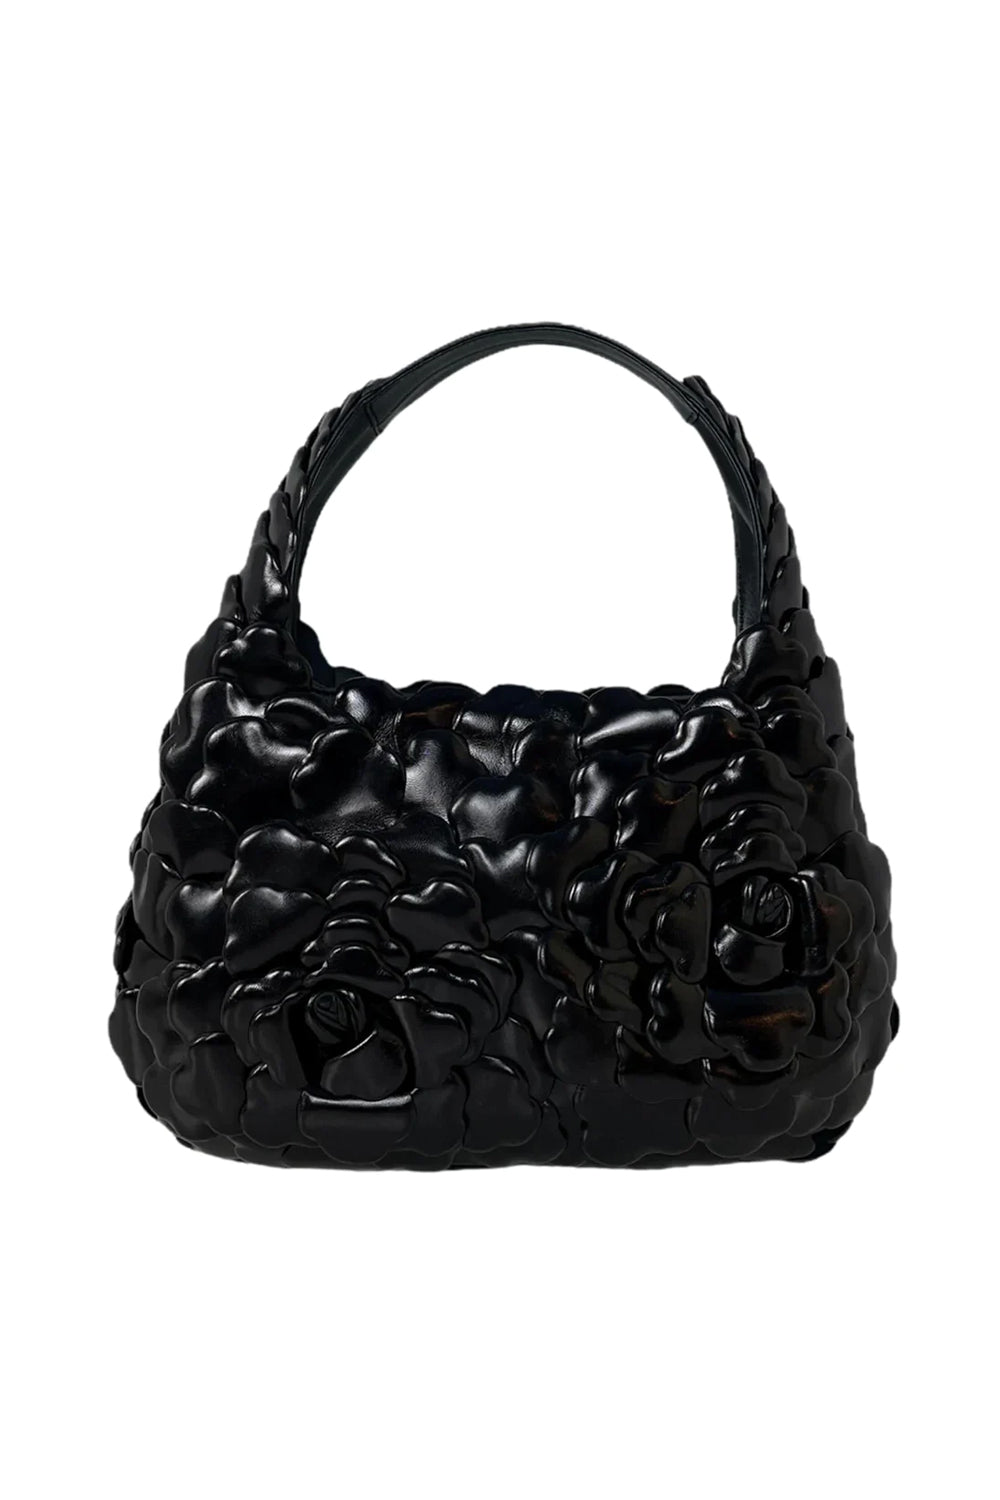 Valentino Garavani Atelier Bag 03 Black Edition Small Hobo Bag